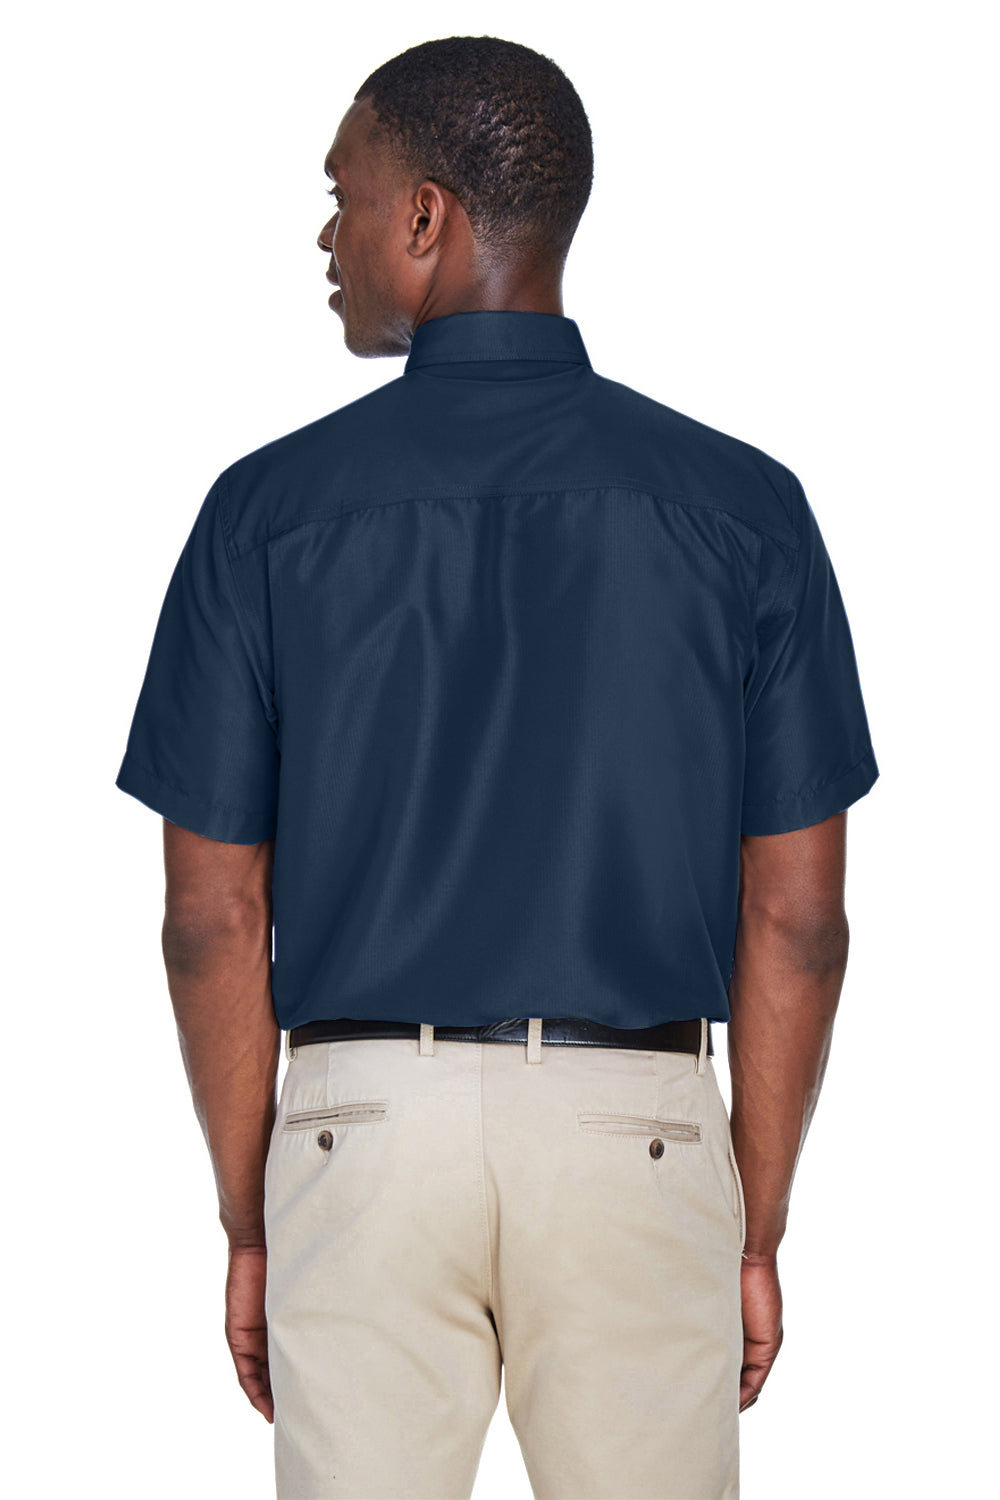 Harriton M580 Mens Key West Performance Short Sleeve Button Down Shirt w/ Double Pockets Navy Blue Back